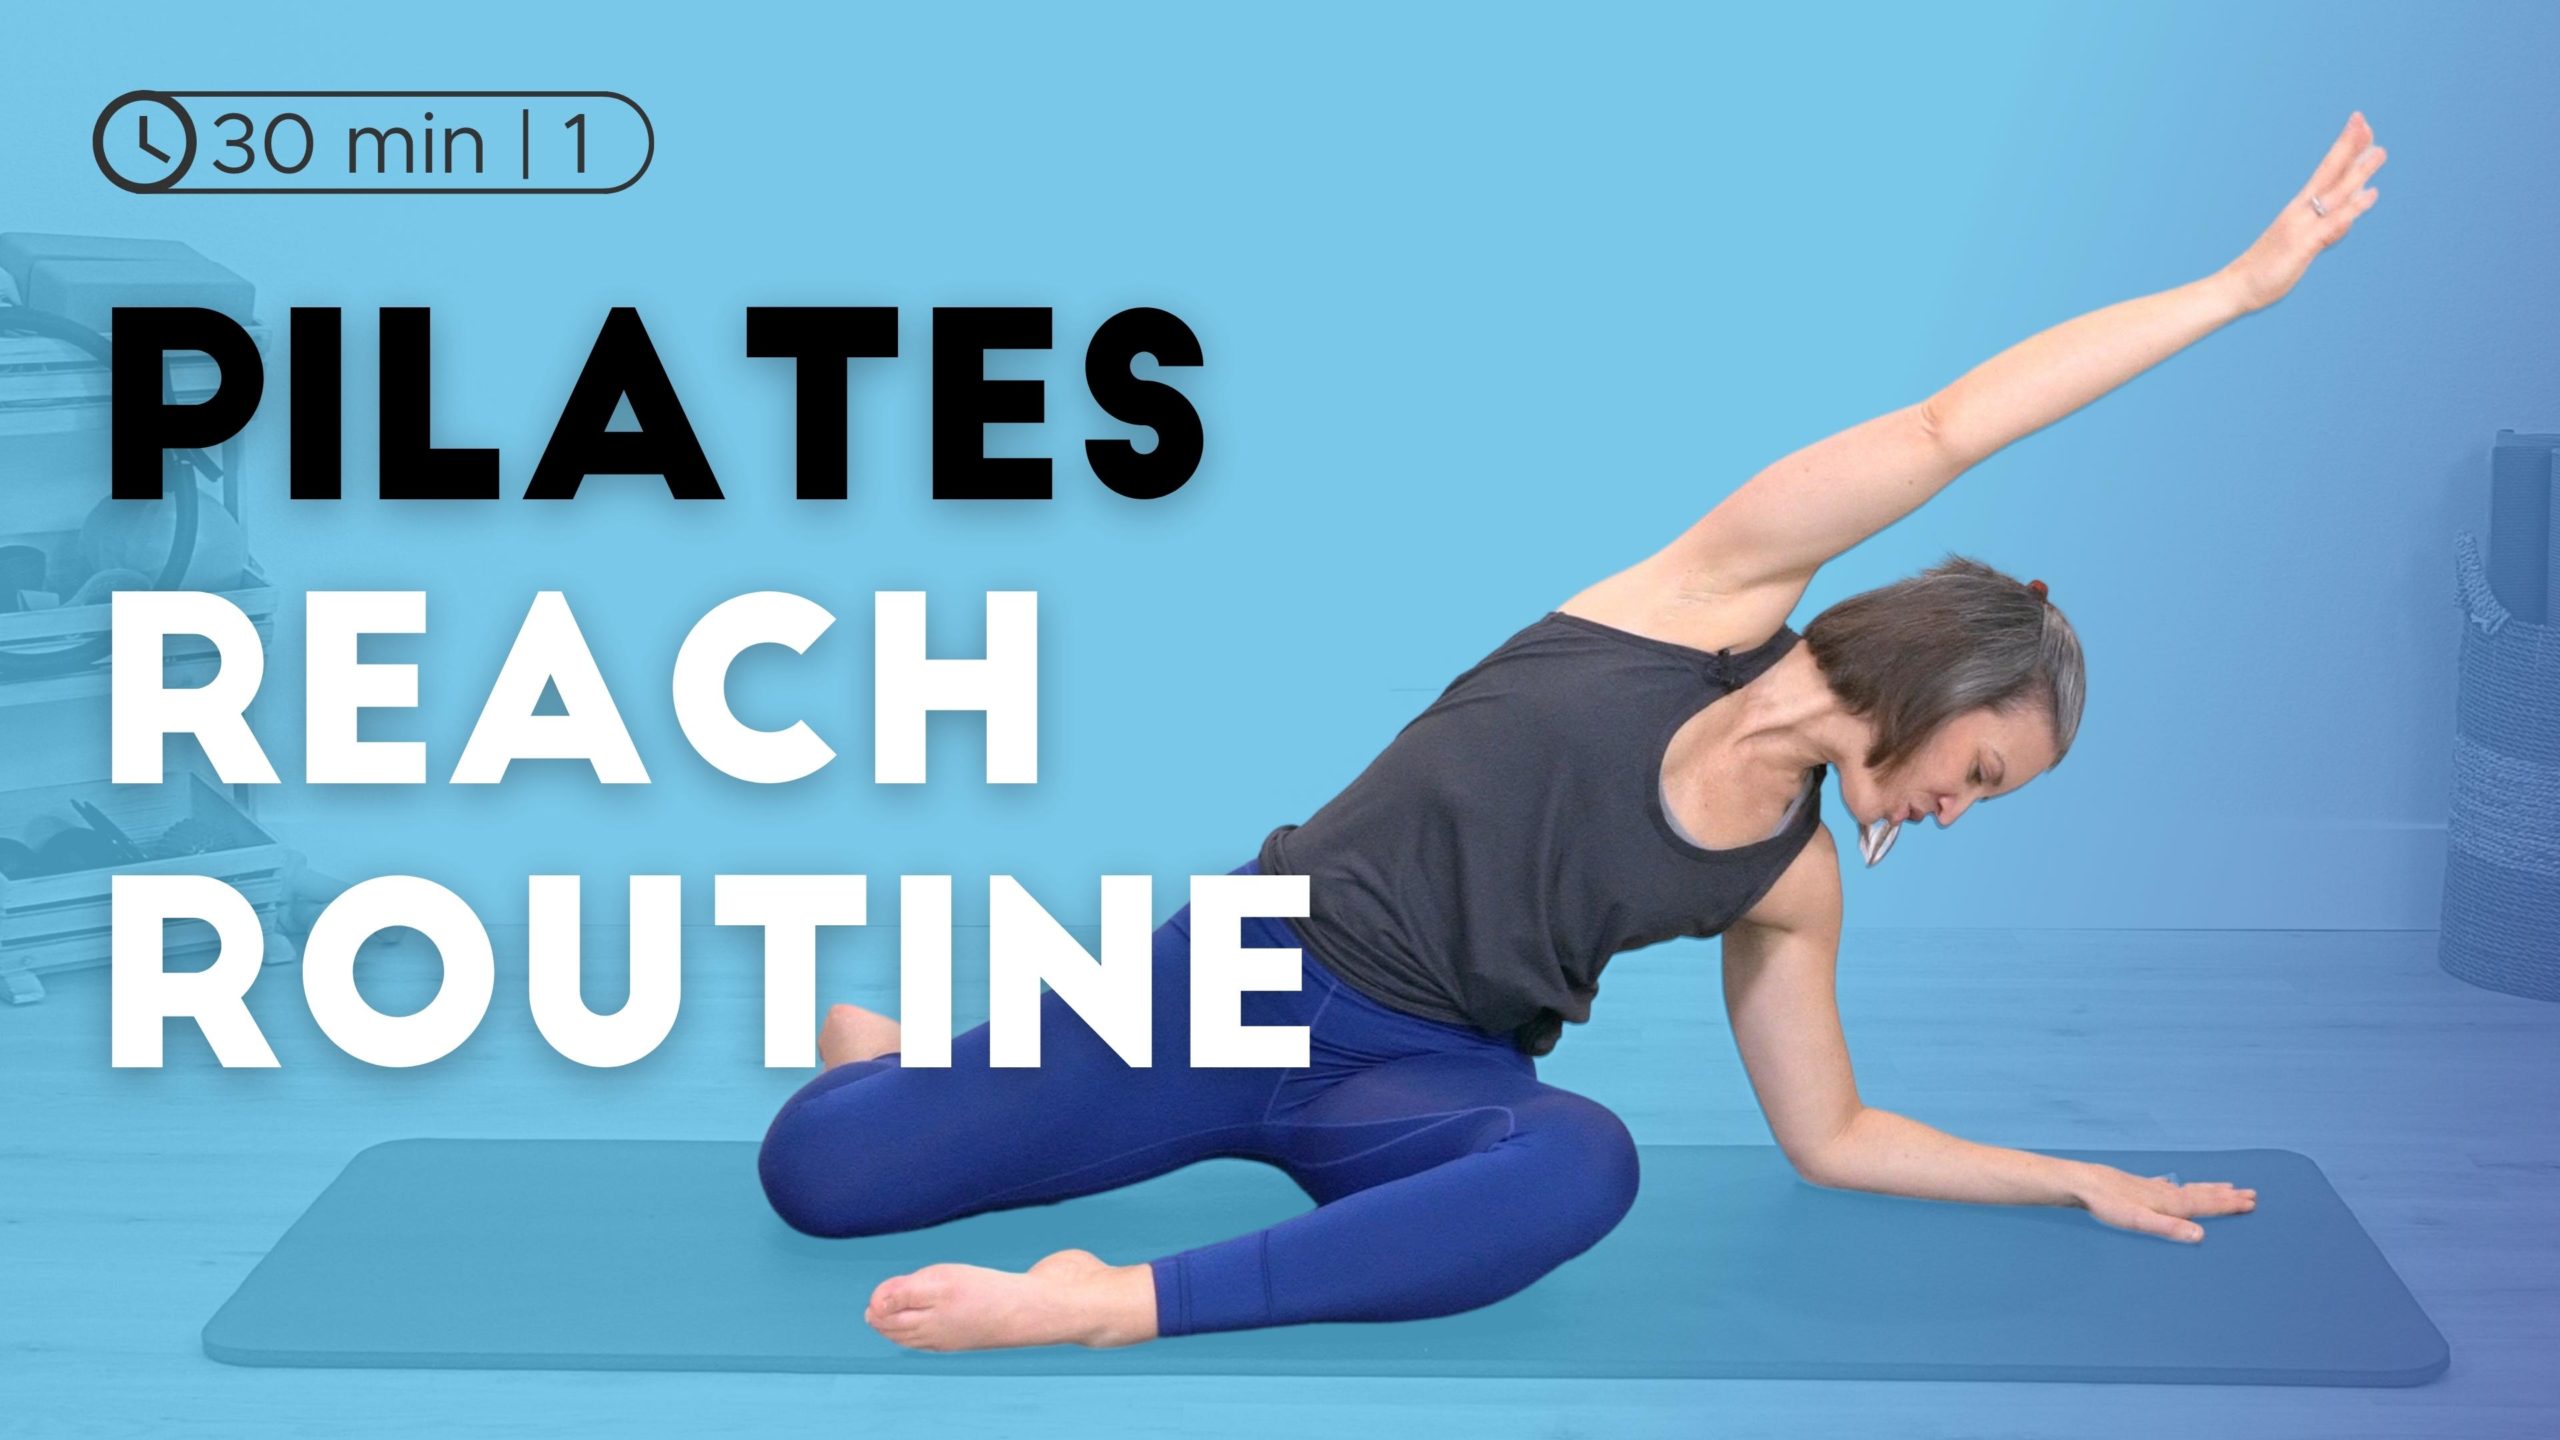 Pilates Reach Routine